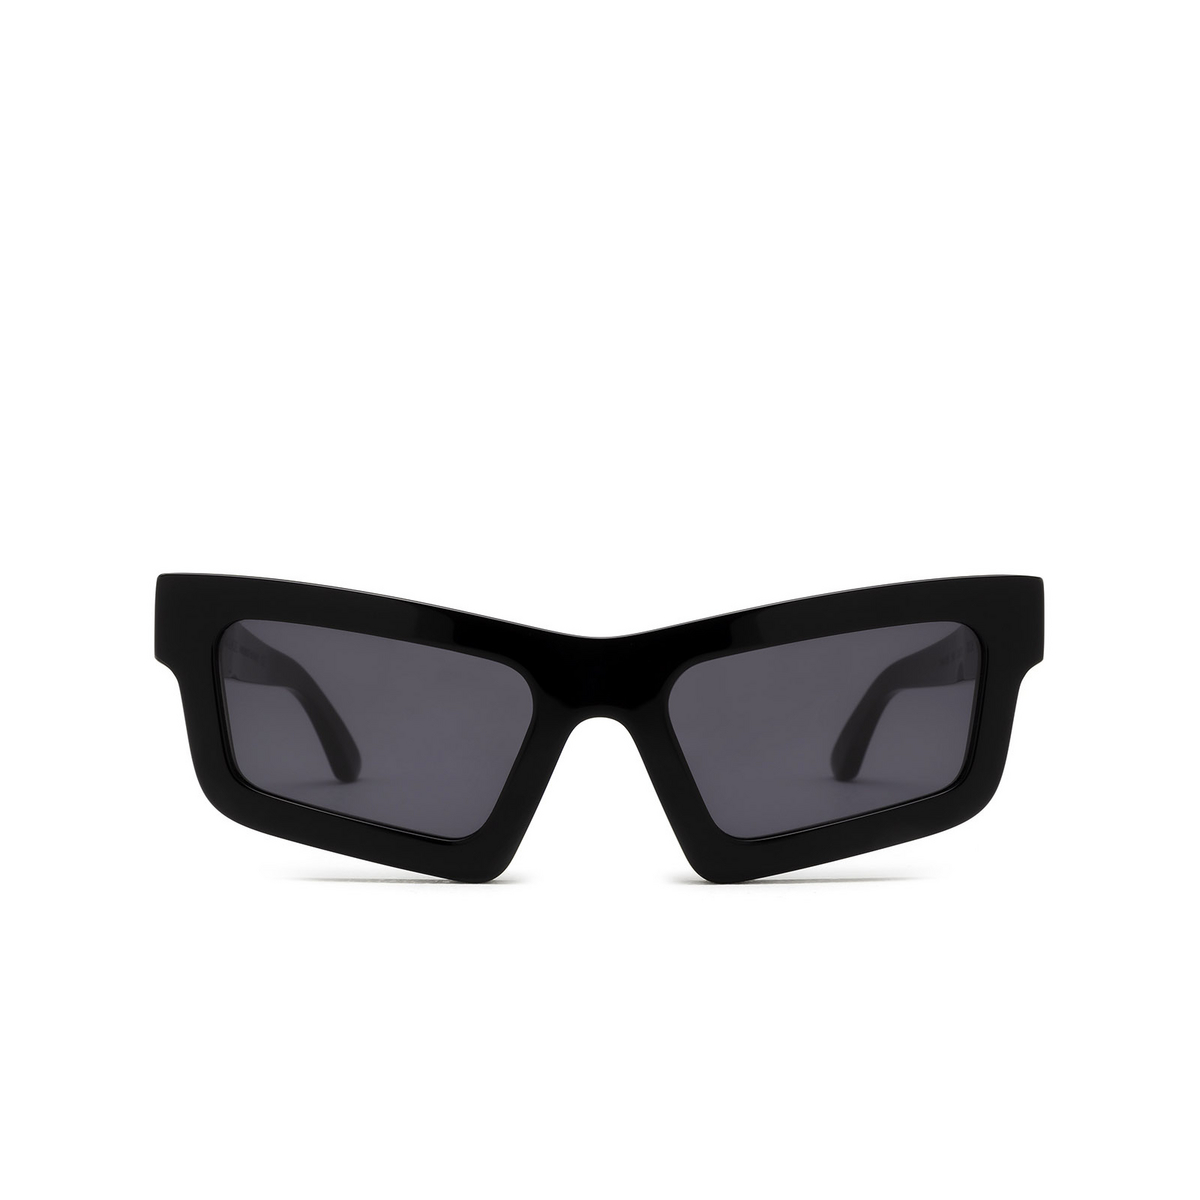 Huma TILDE Sunglasses 06 Black - front view